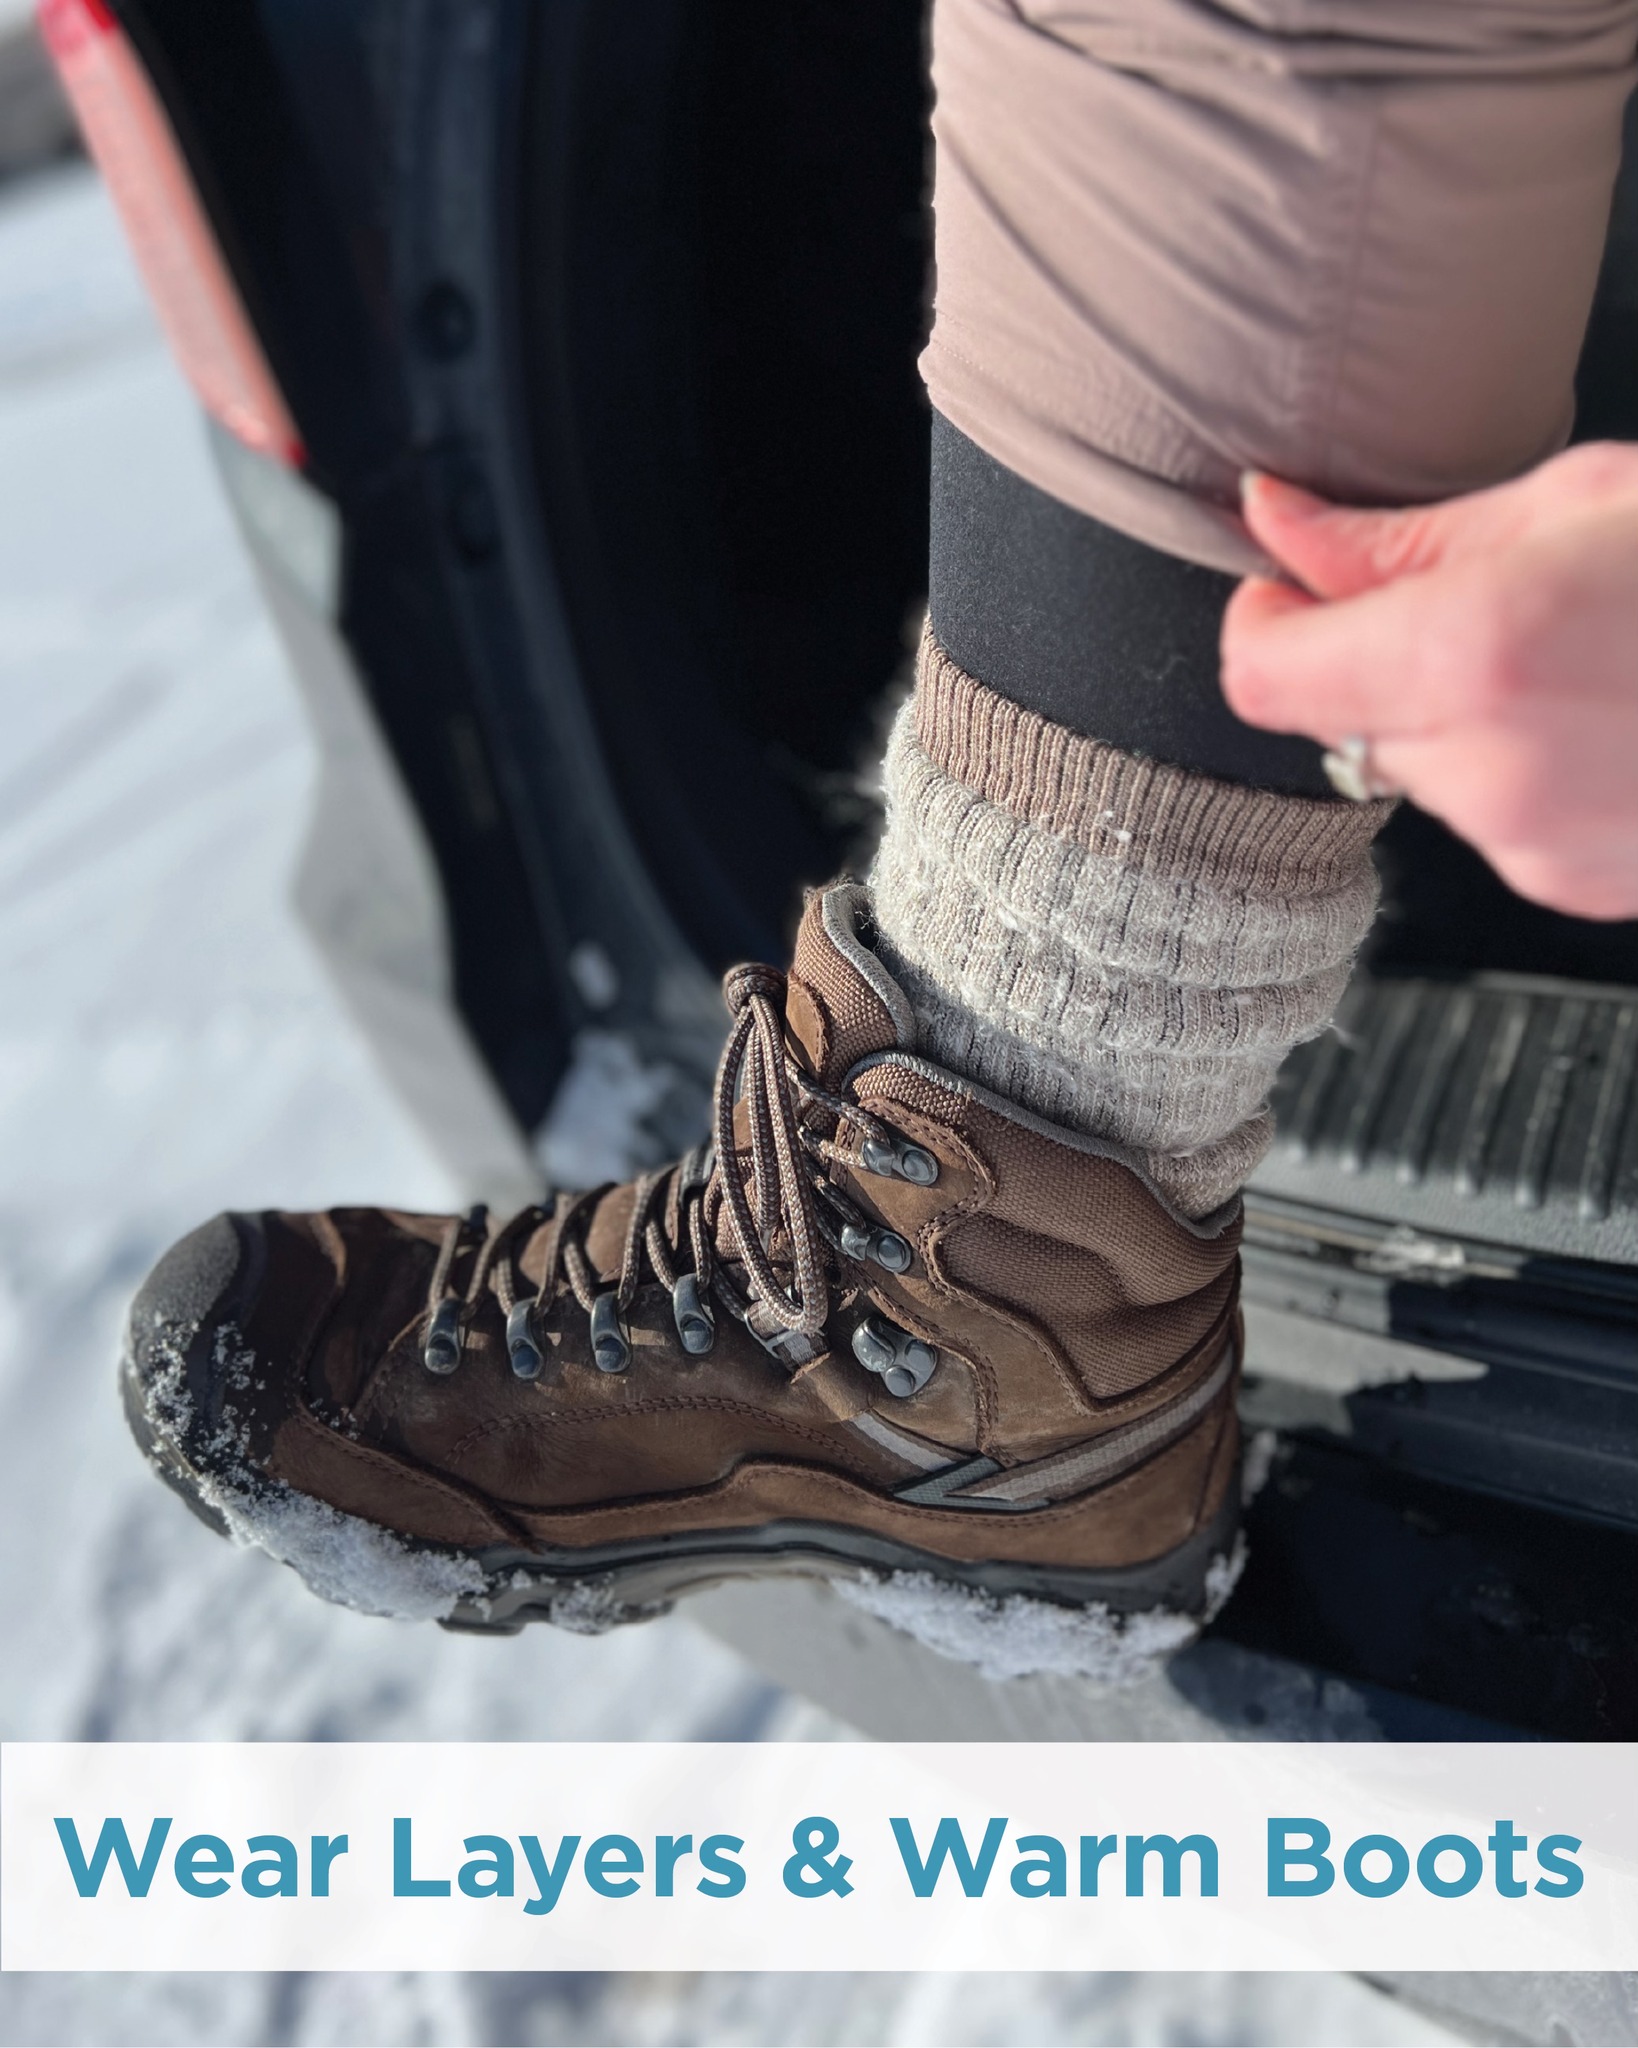 Warm hiking boots and socks.